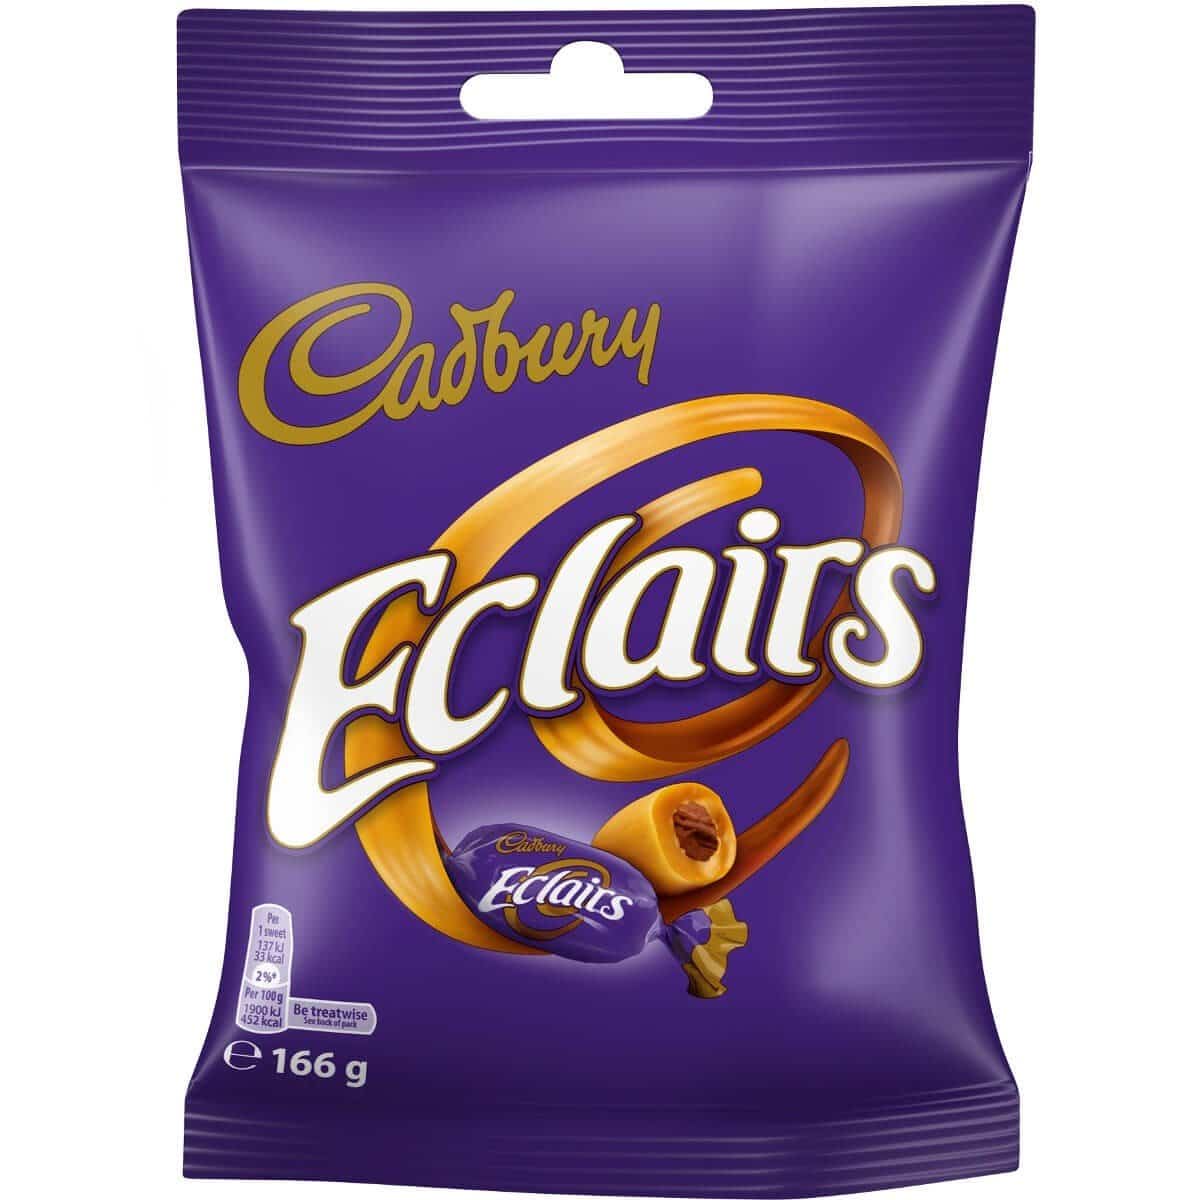 Cadbury Chocolate Eclairs – Brits R U.S.